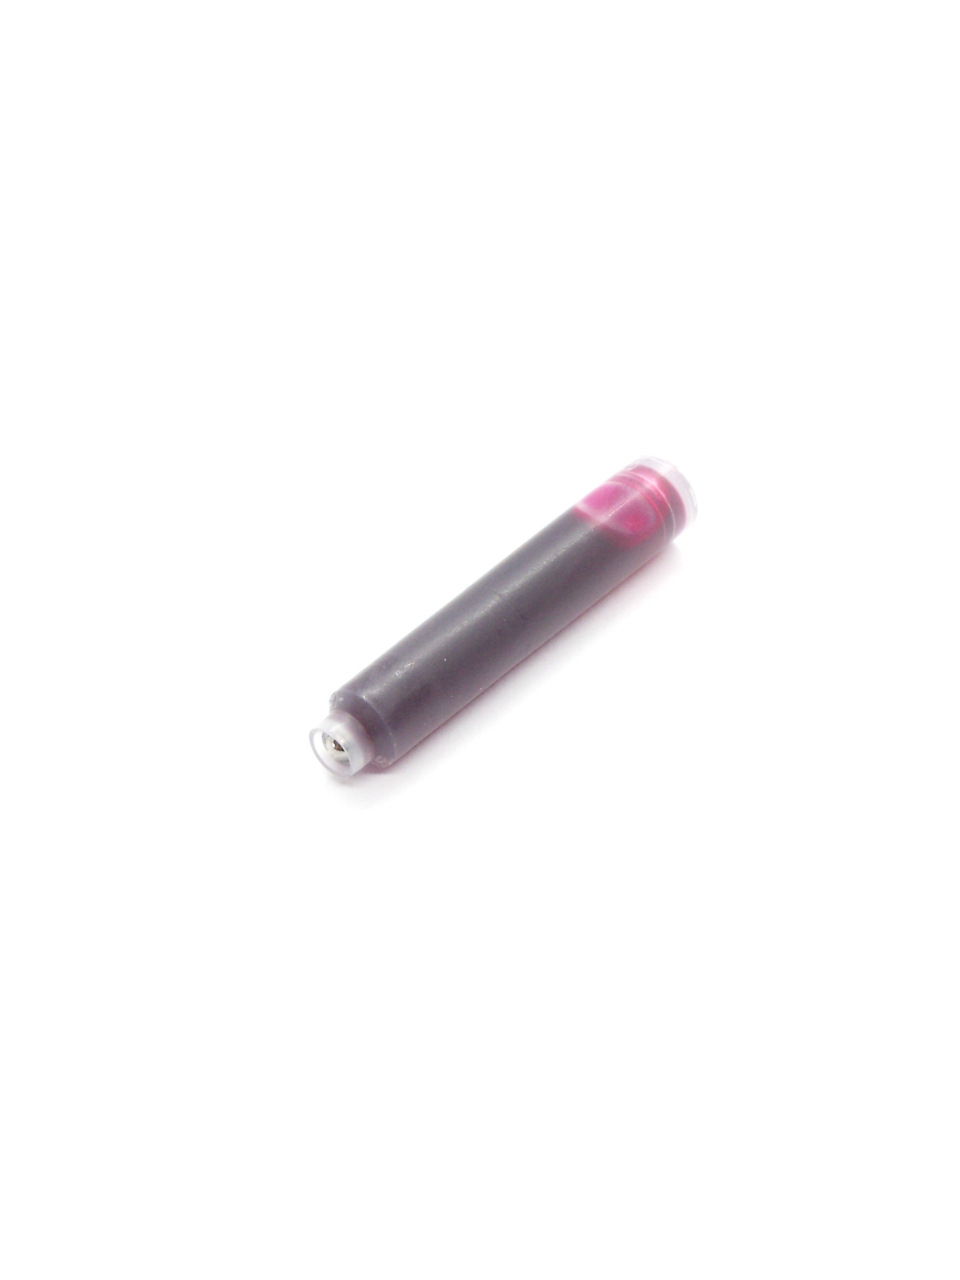 Cartridges For Kaiduoli Fountain Pens (Pink)